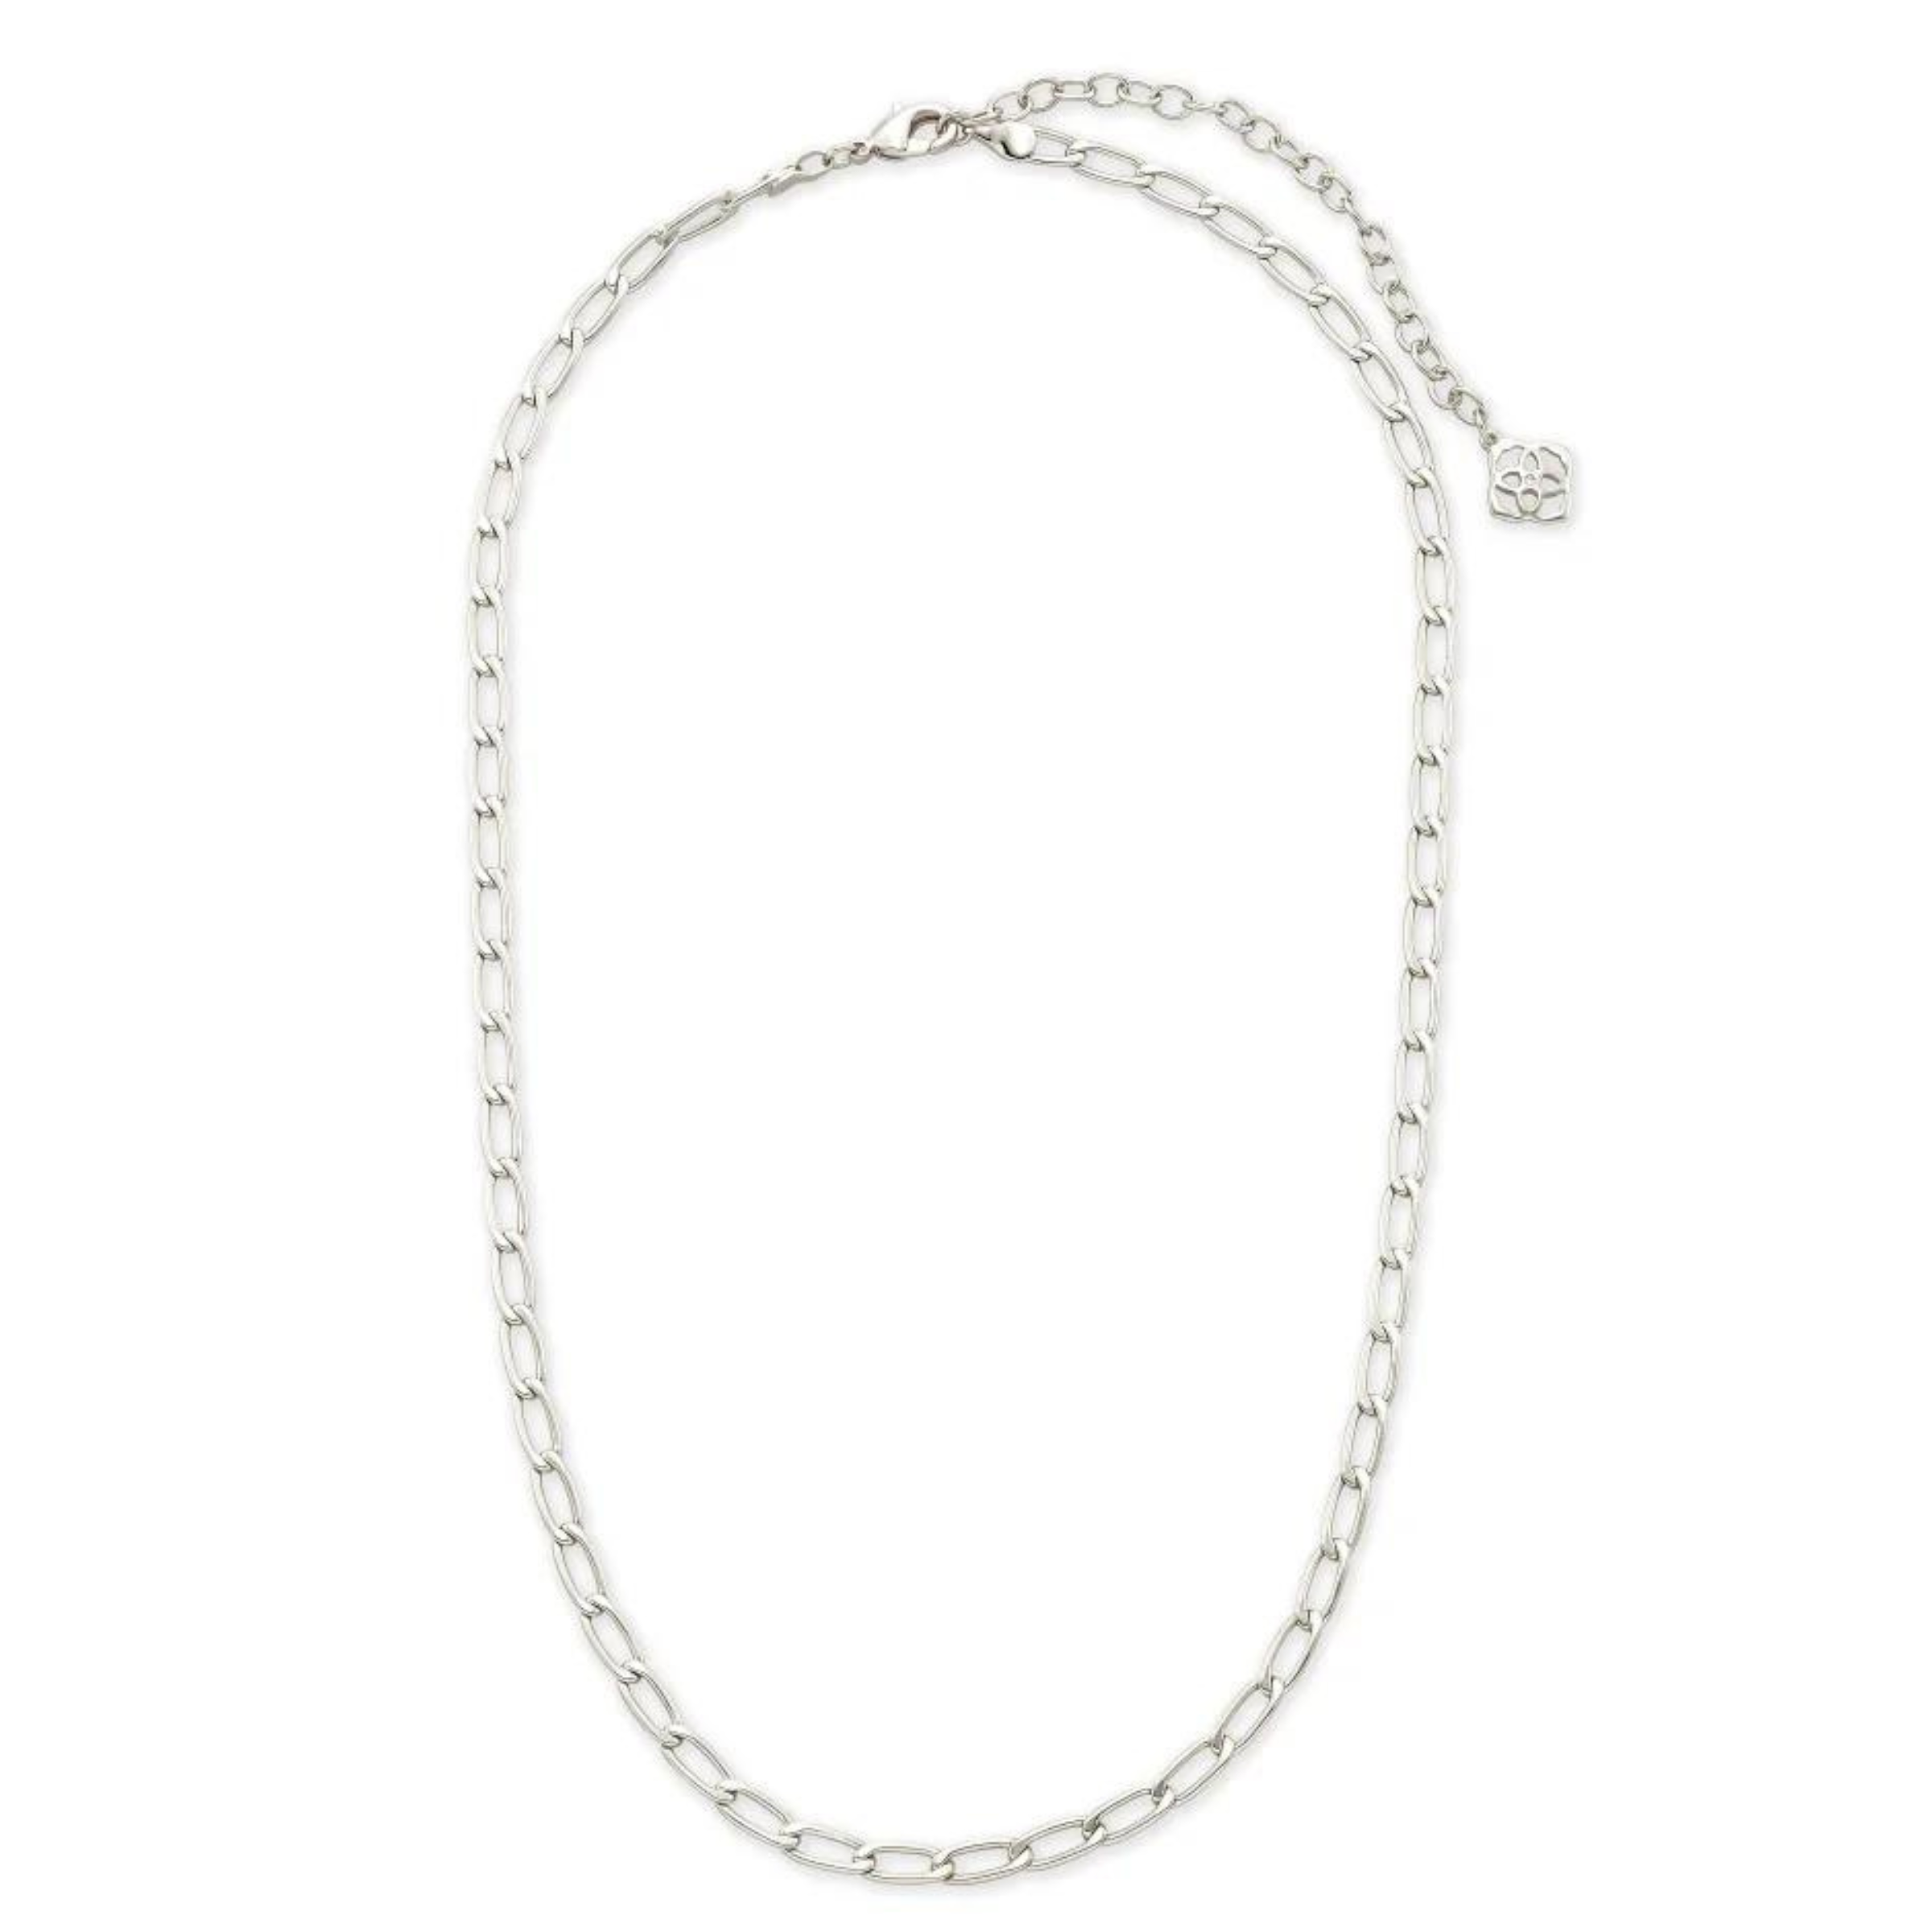 Kendra Scott | Merrick Chain Necklace in Silver